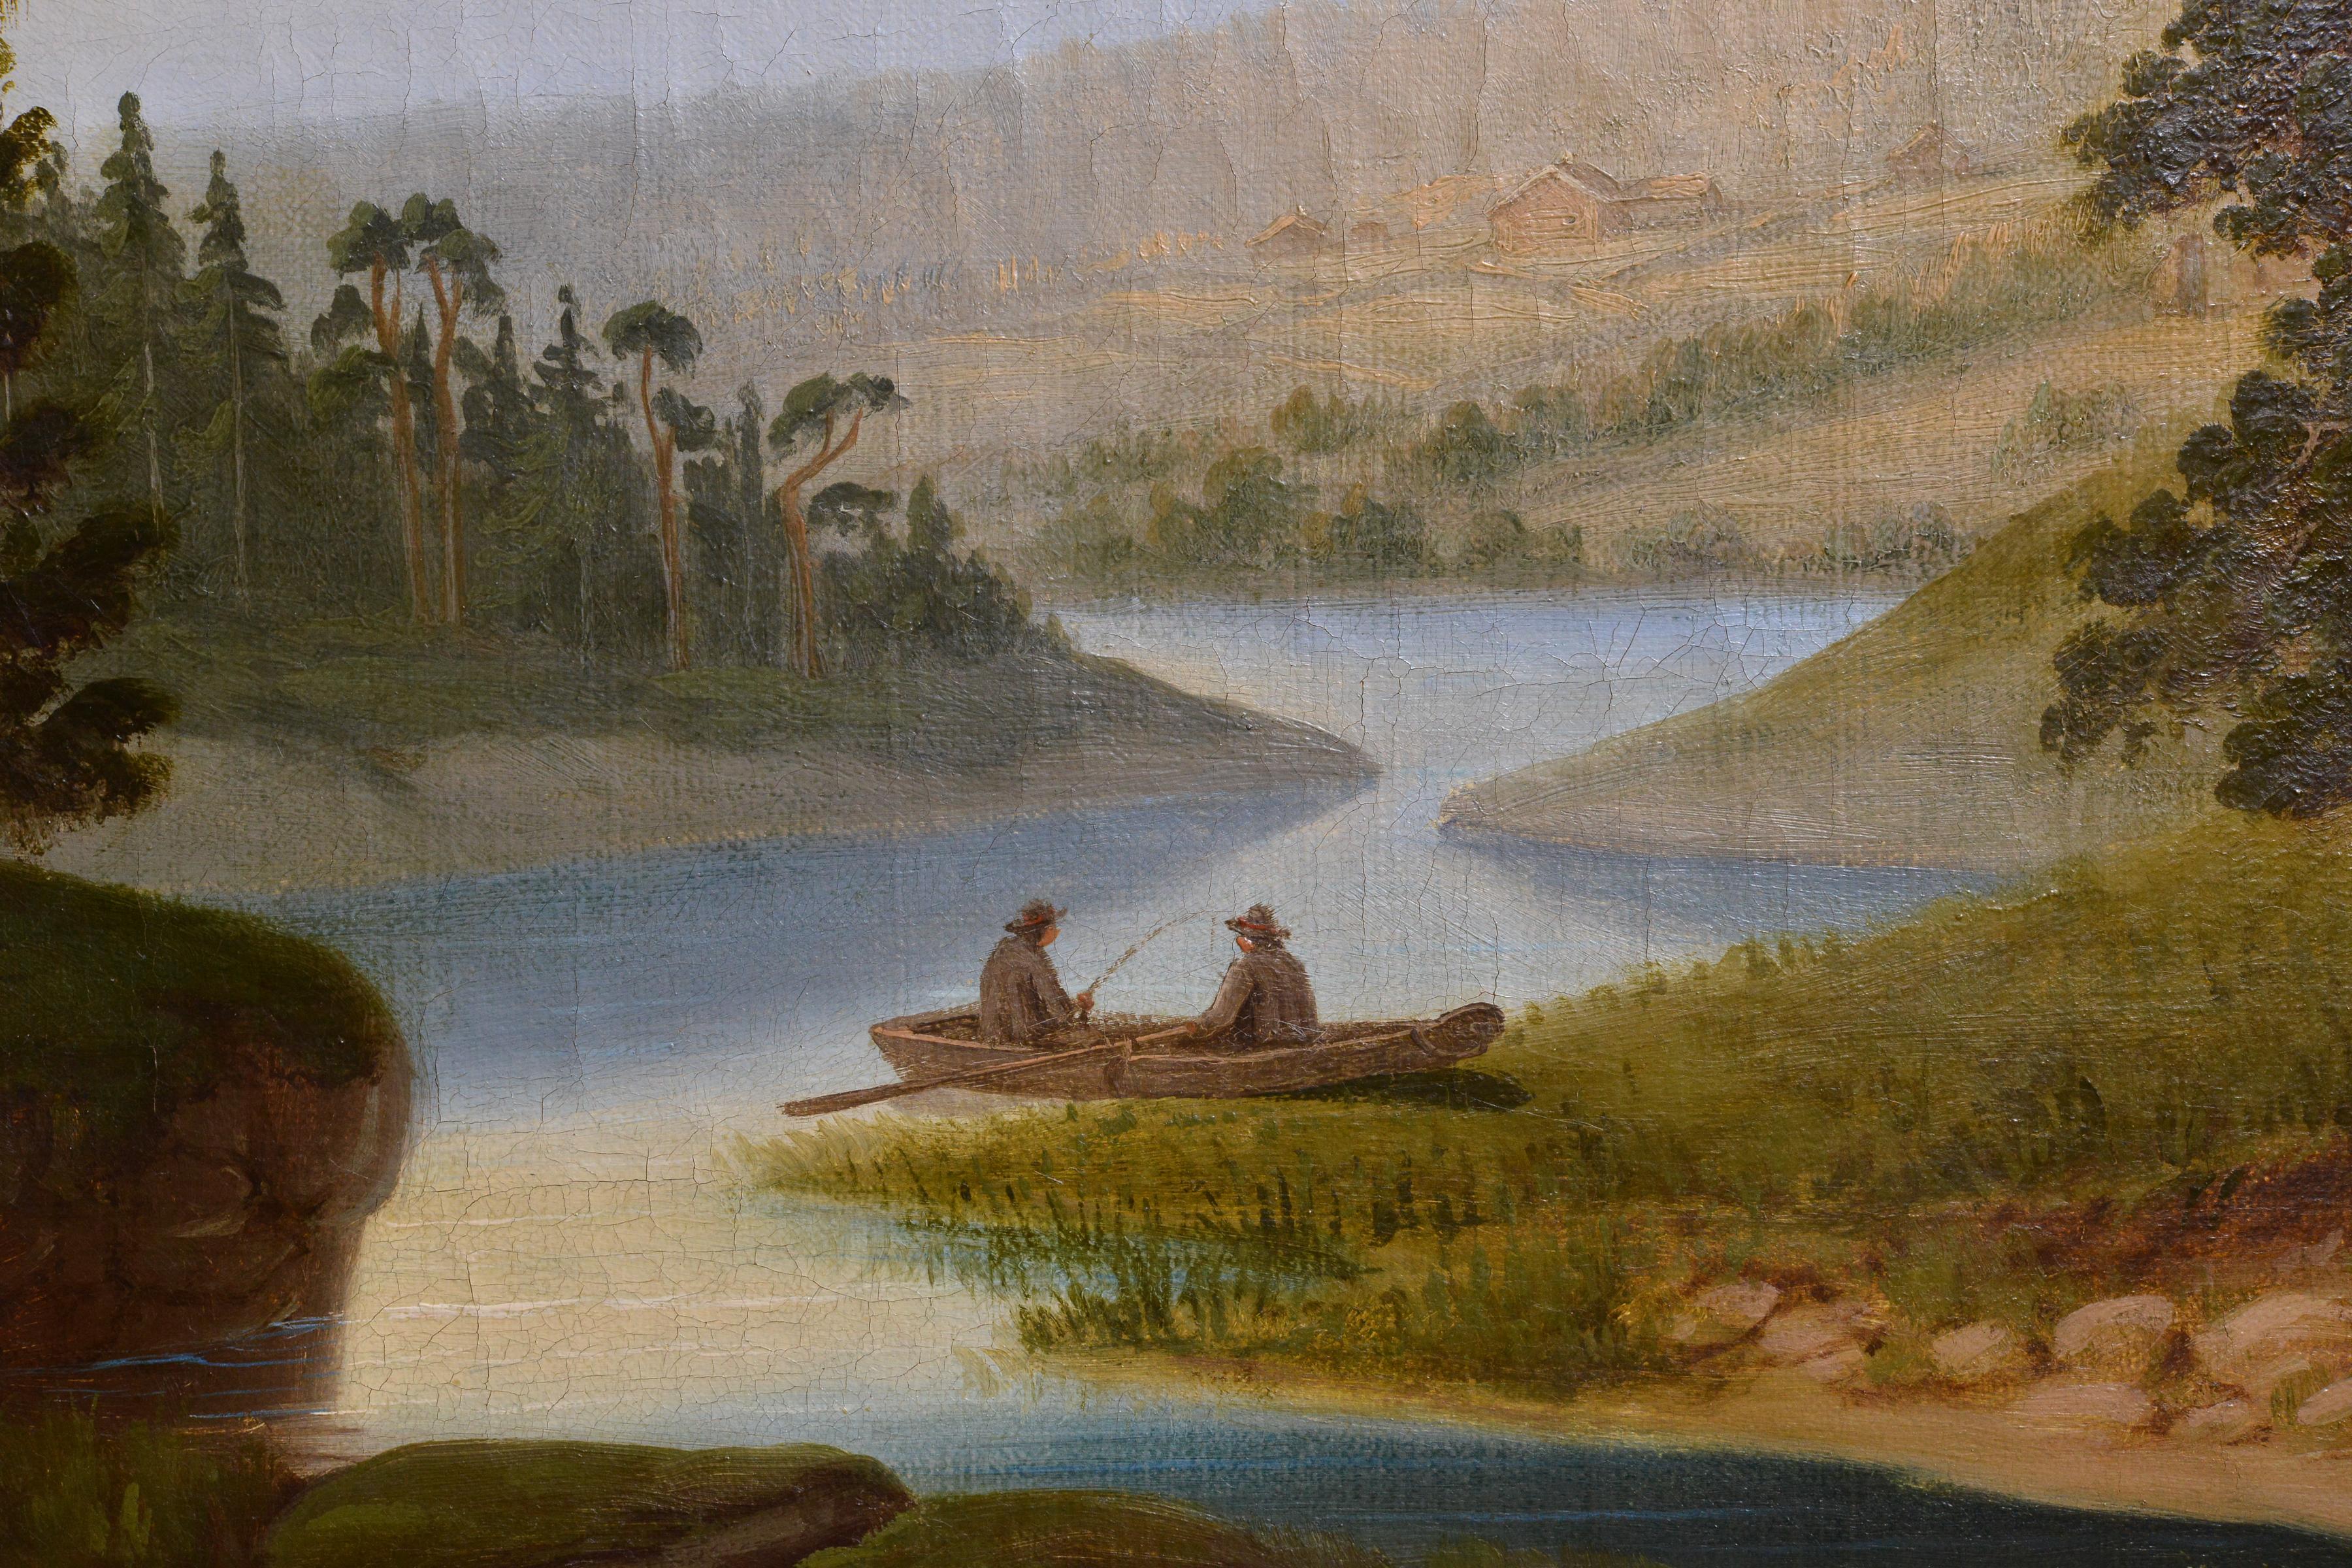 Fishermen on River Idyllic Scandinavian Landscape 19th century Oil Painting For Sale 2